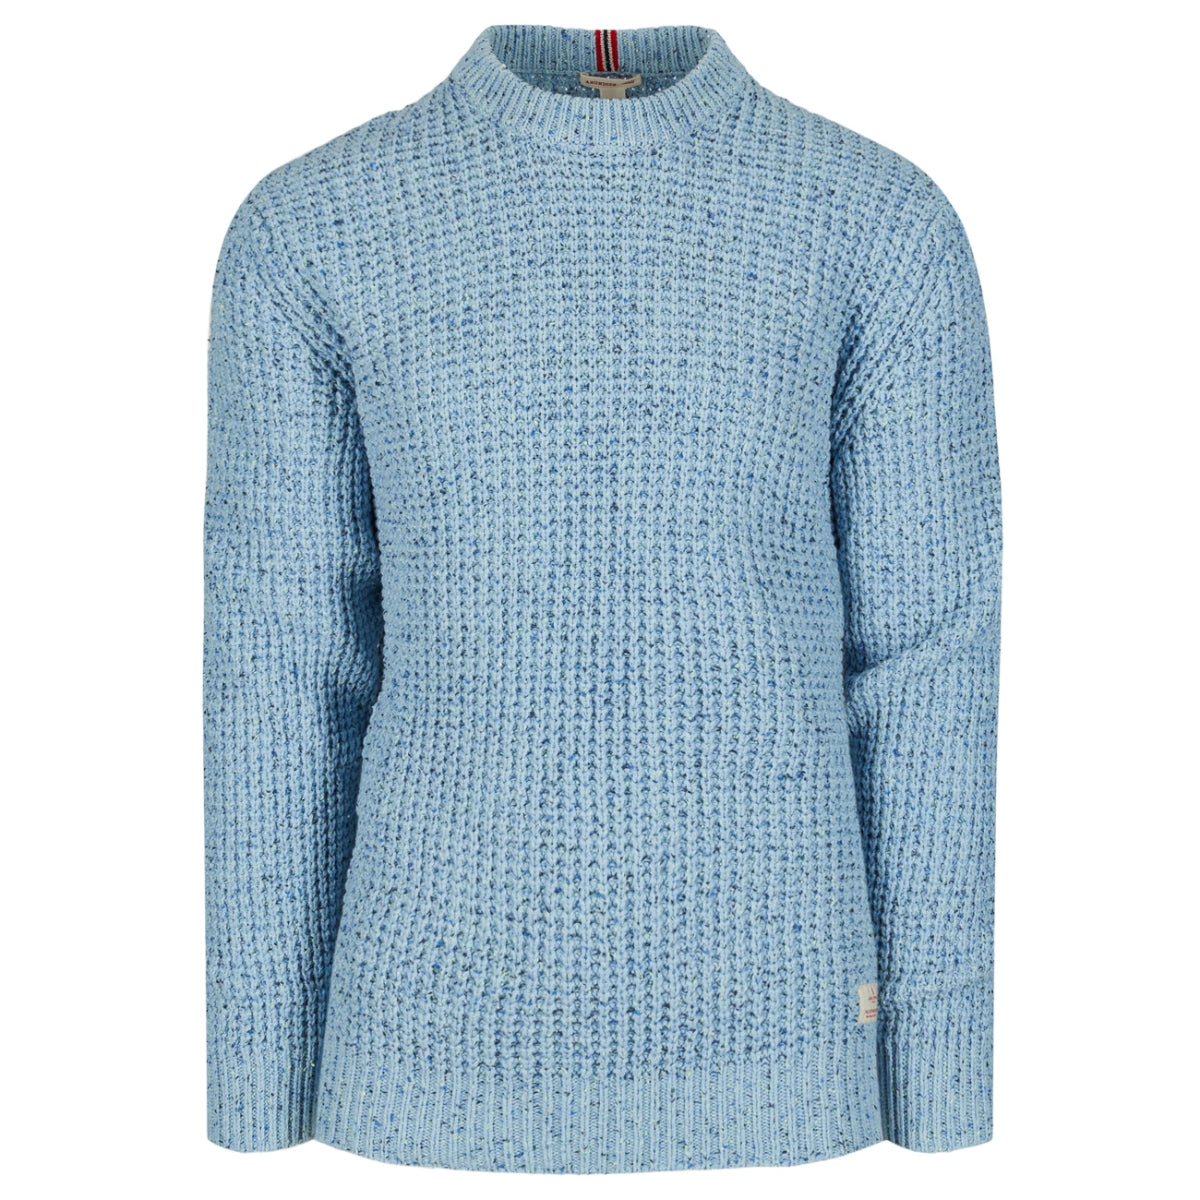 Amundsen Field Sweater Mens - Faded Blue